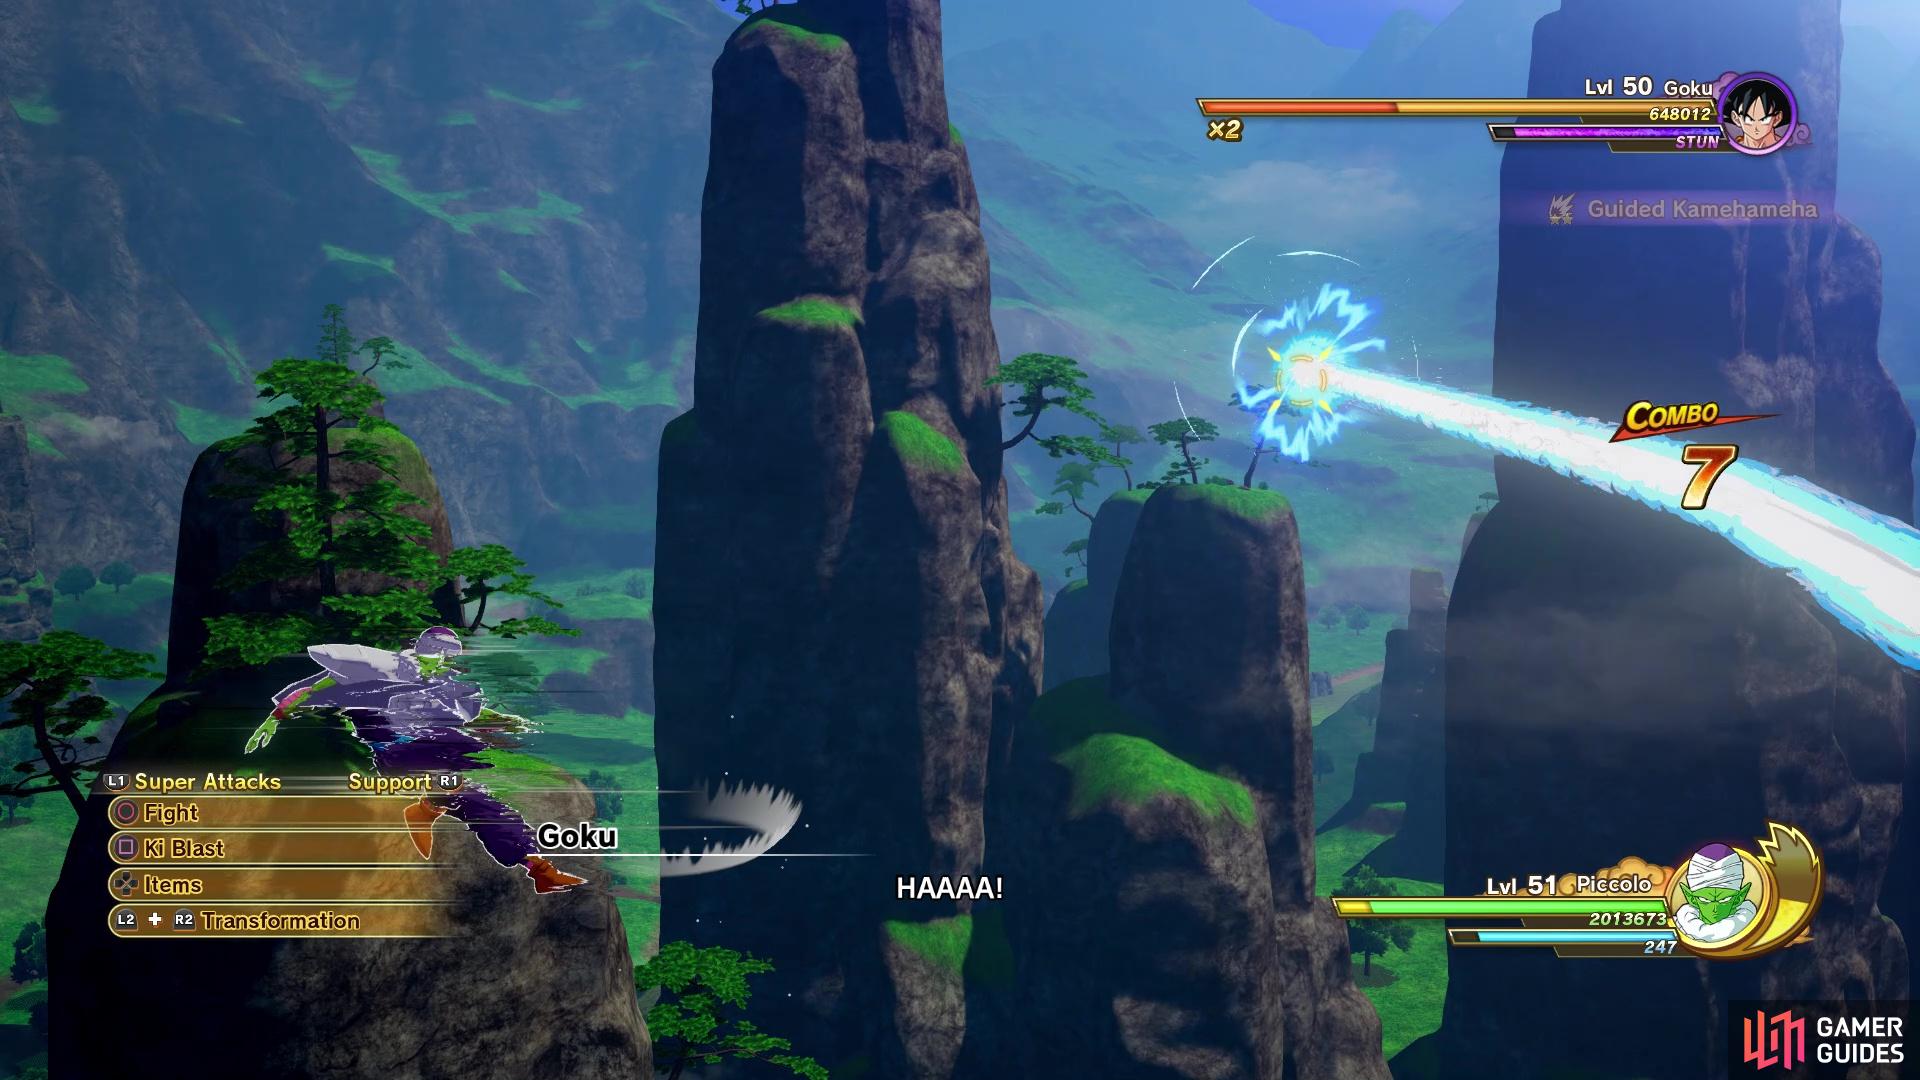 Goku's Kamehameha attacks are pretty telegraphed